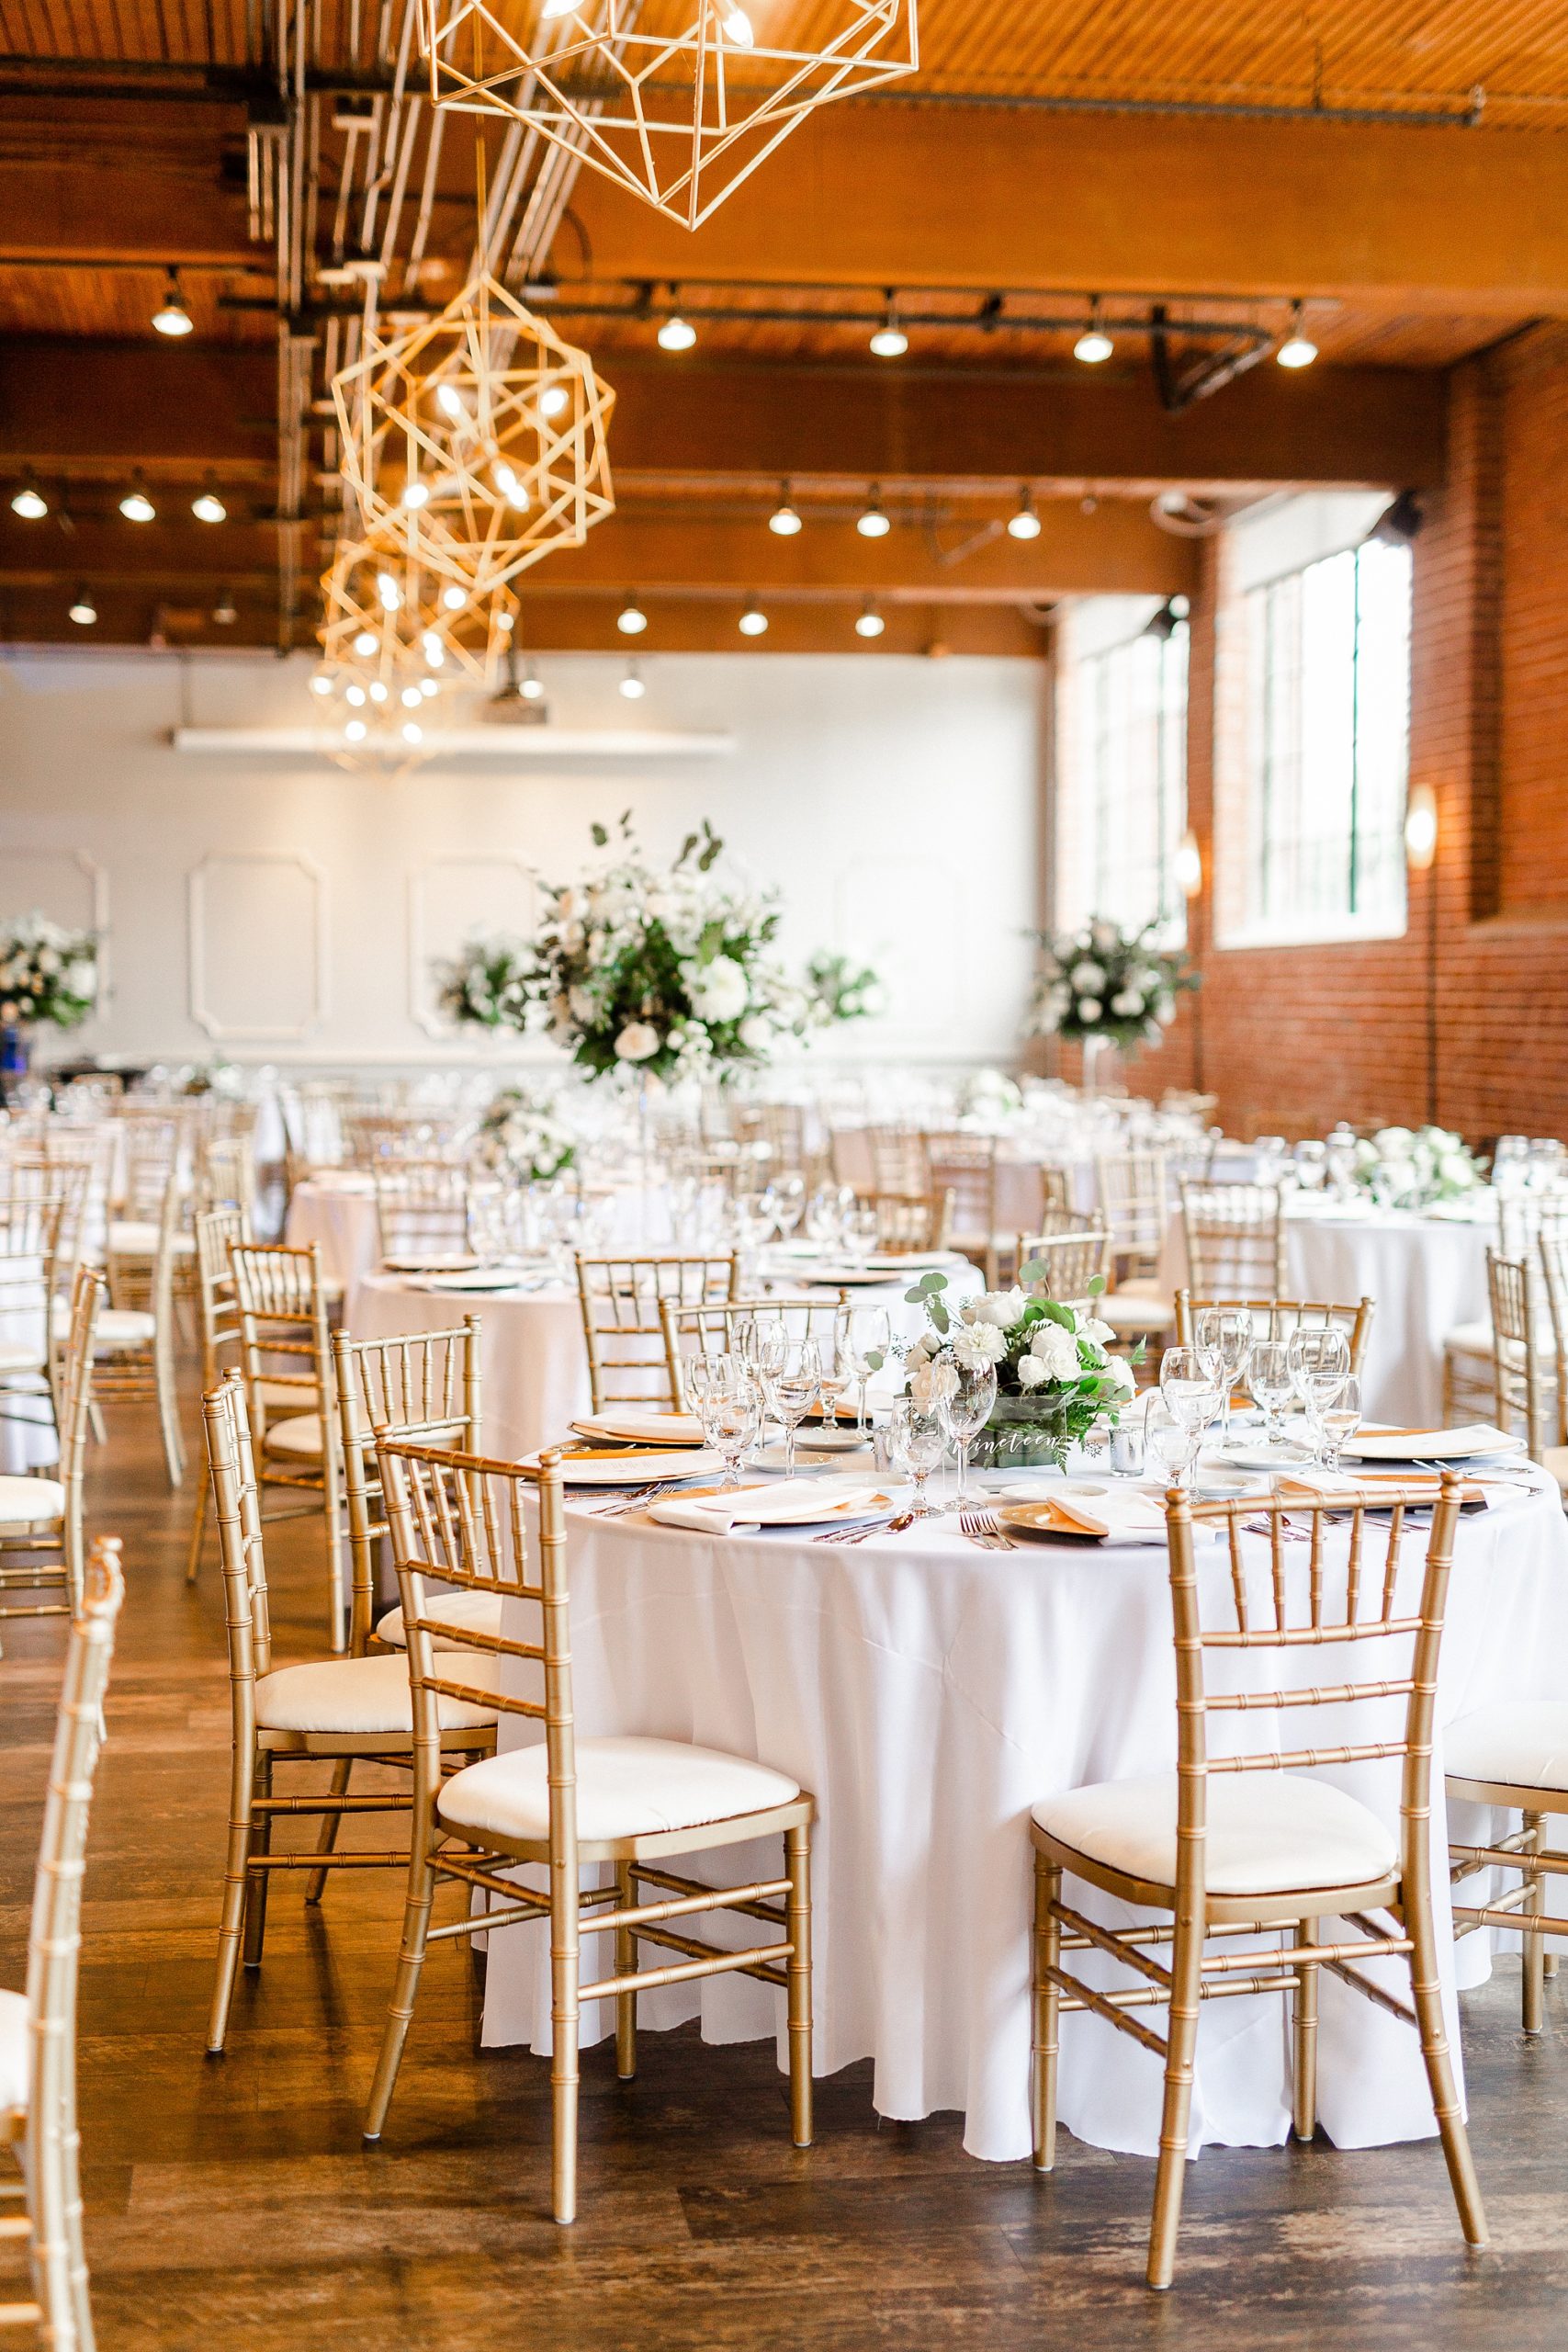 Byron's South End wedding reception with minimalist decor inspiration